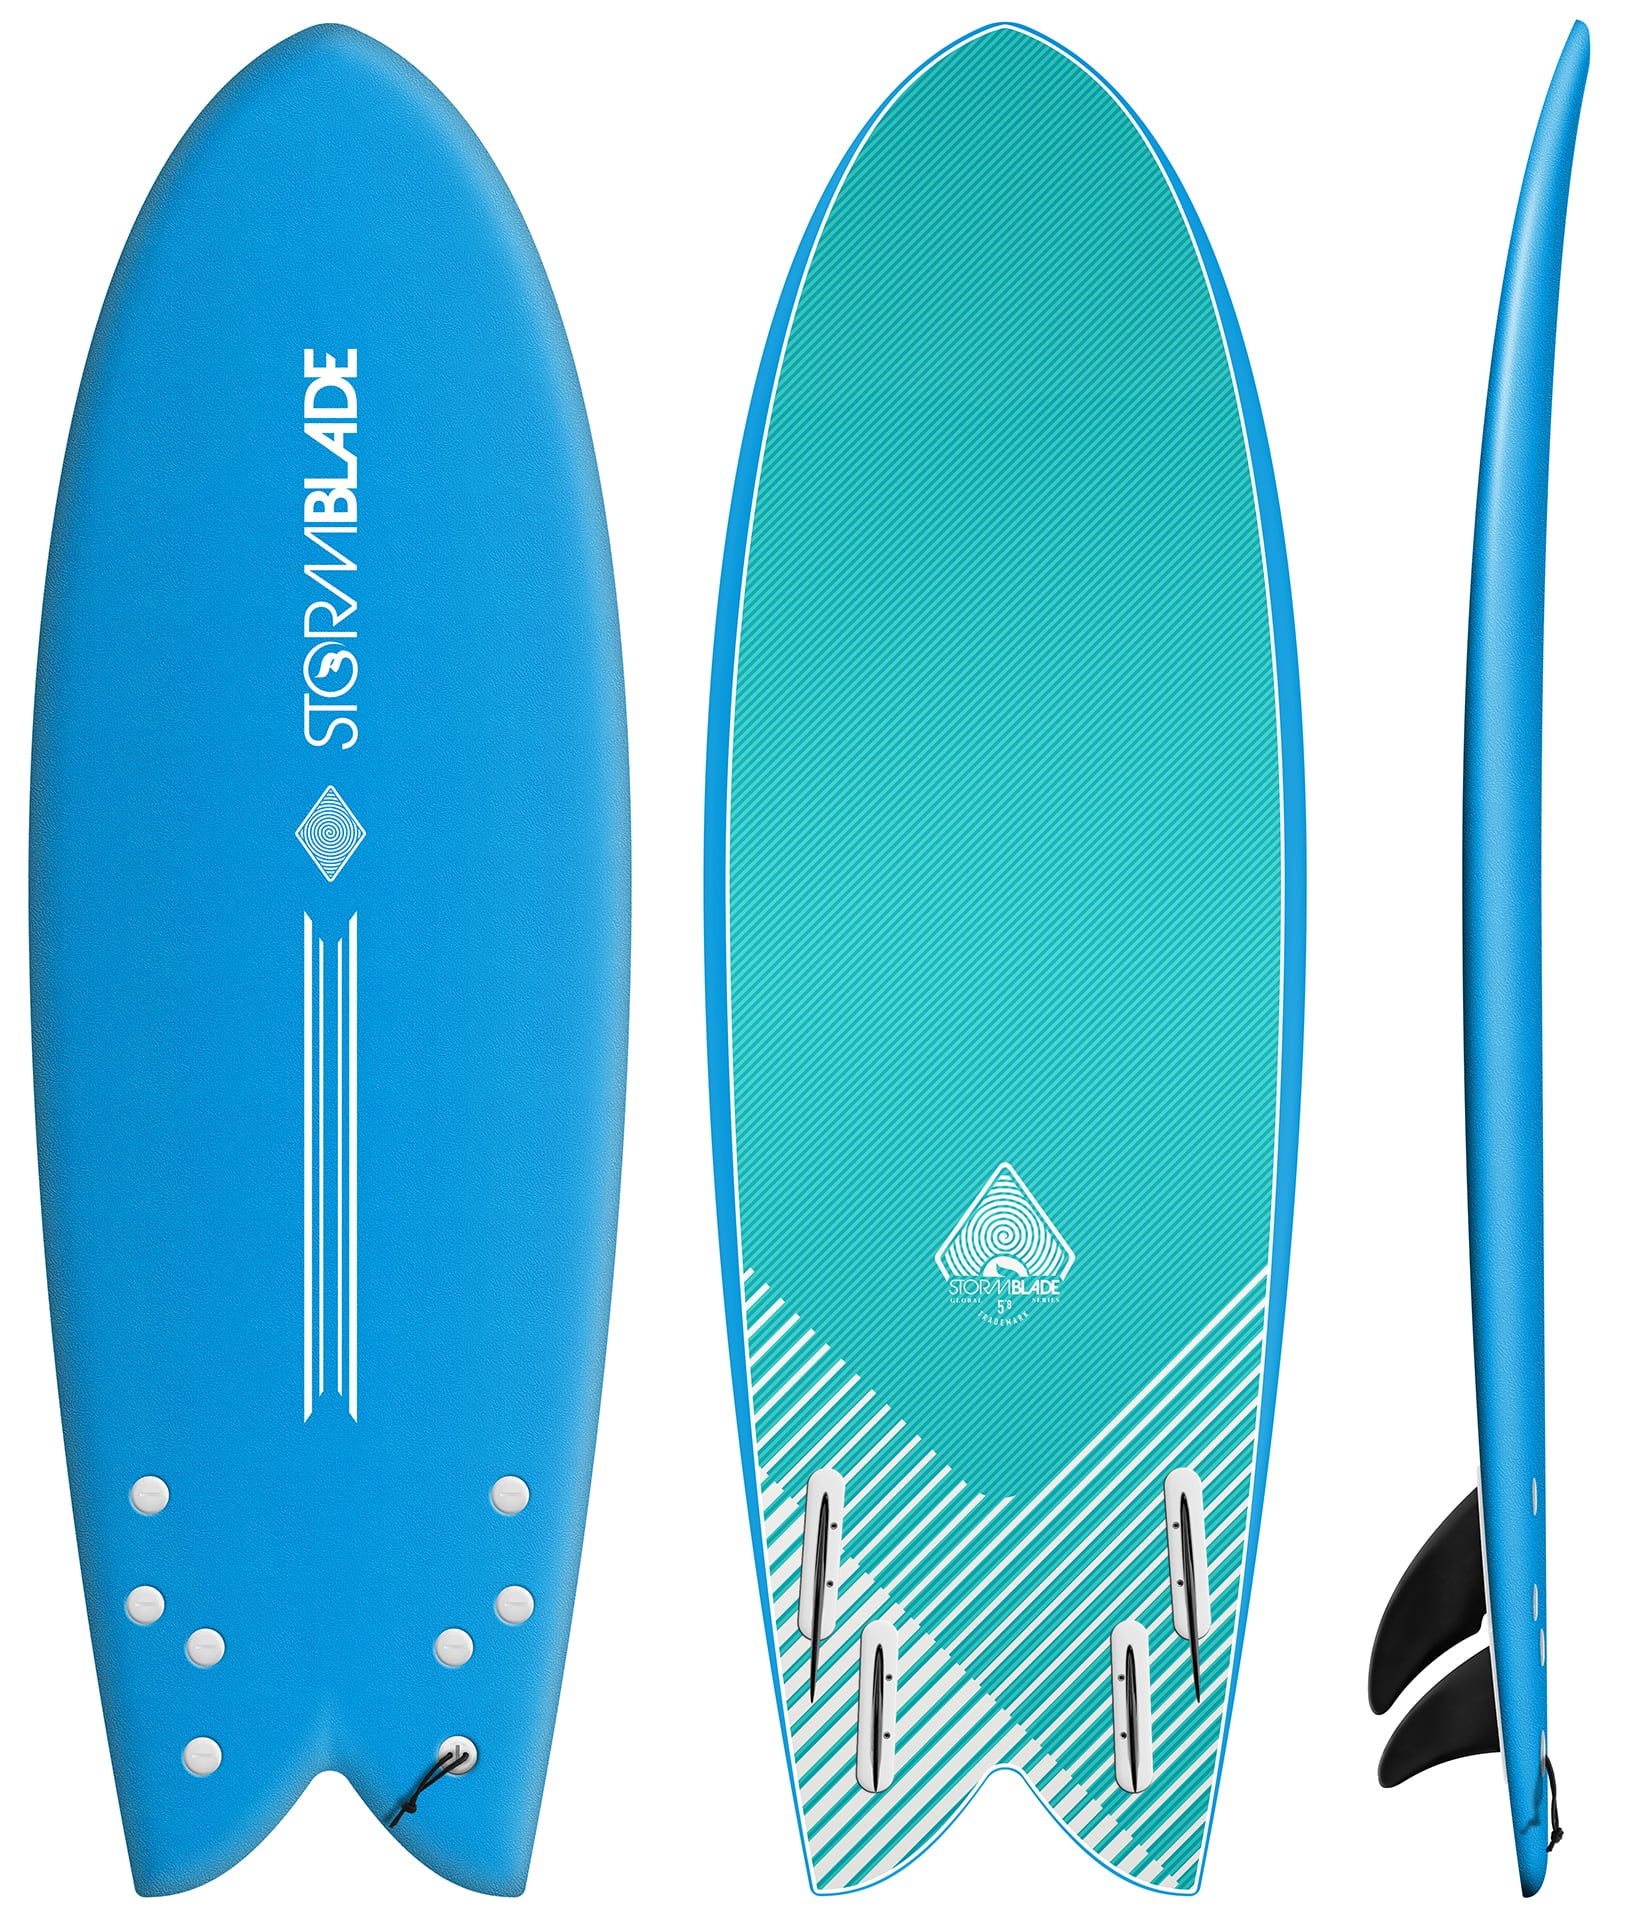 STORM BLADE SURFBOARDS JAPAN | 5ft8 MODERN RETRO FISH SURFBOARDS